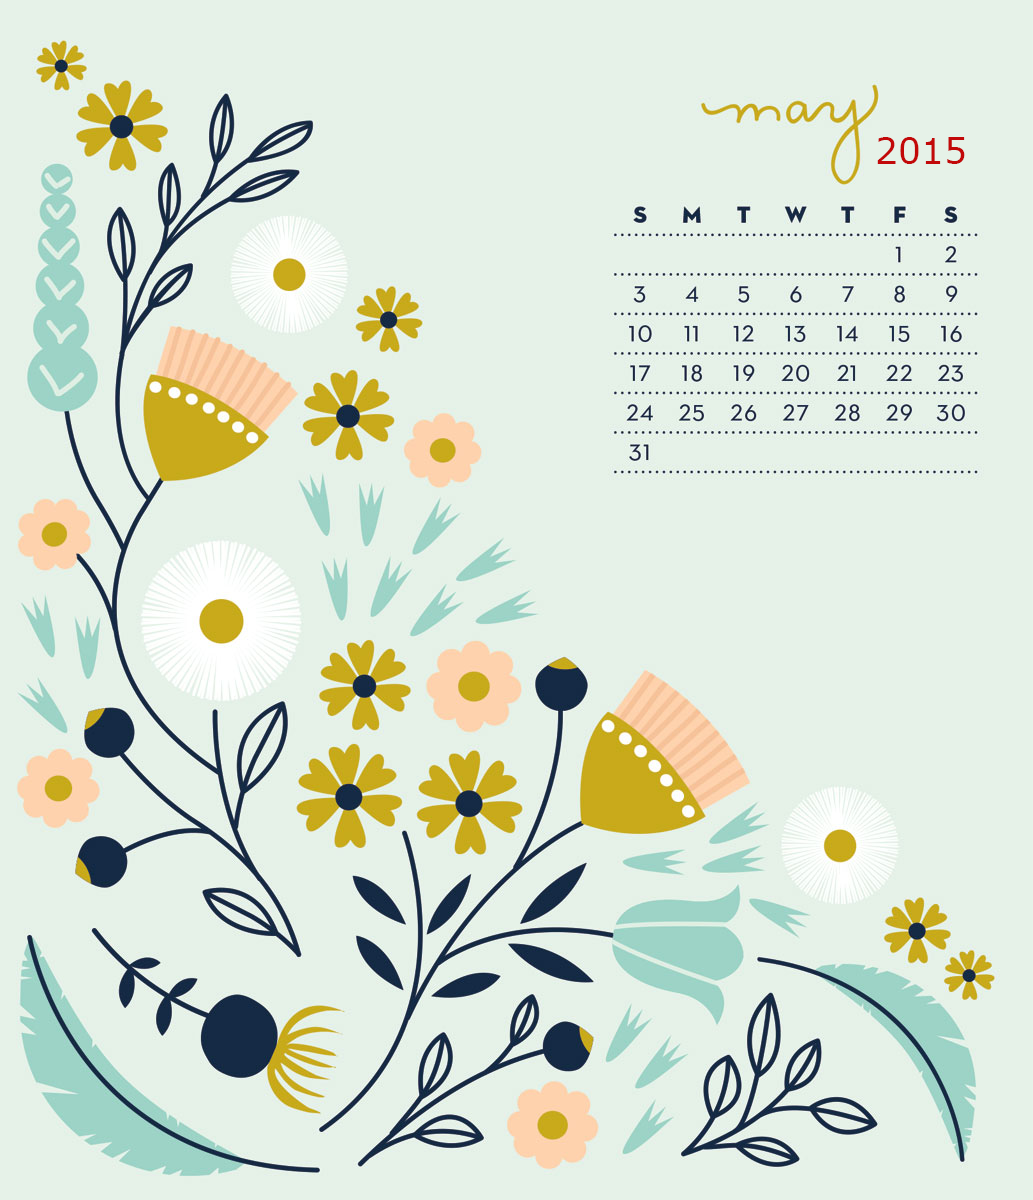 May 2015 Calendar Wallpapers HD Happy Holidays 2015